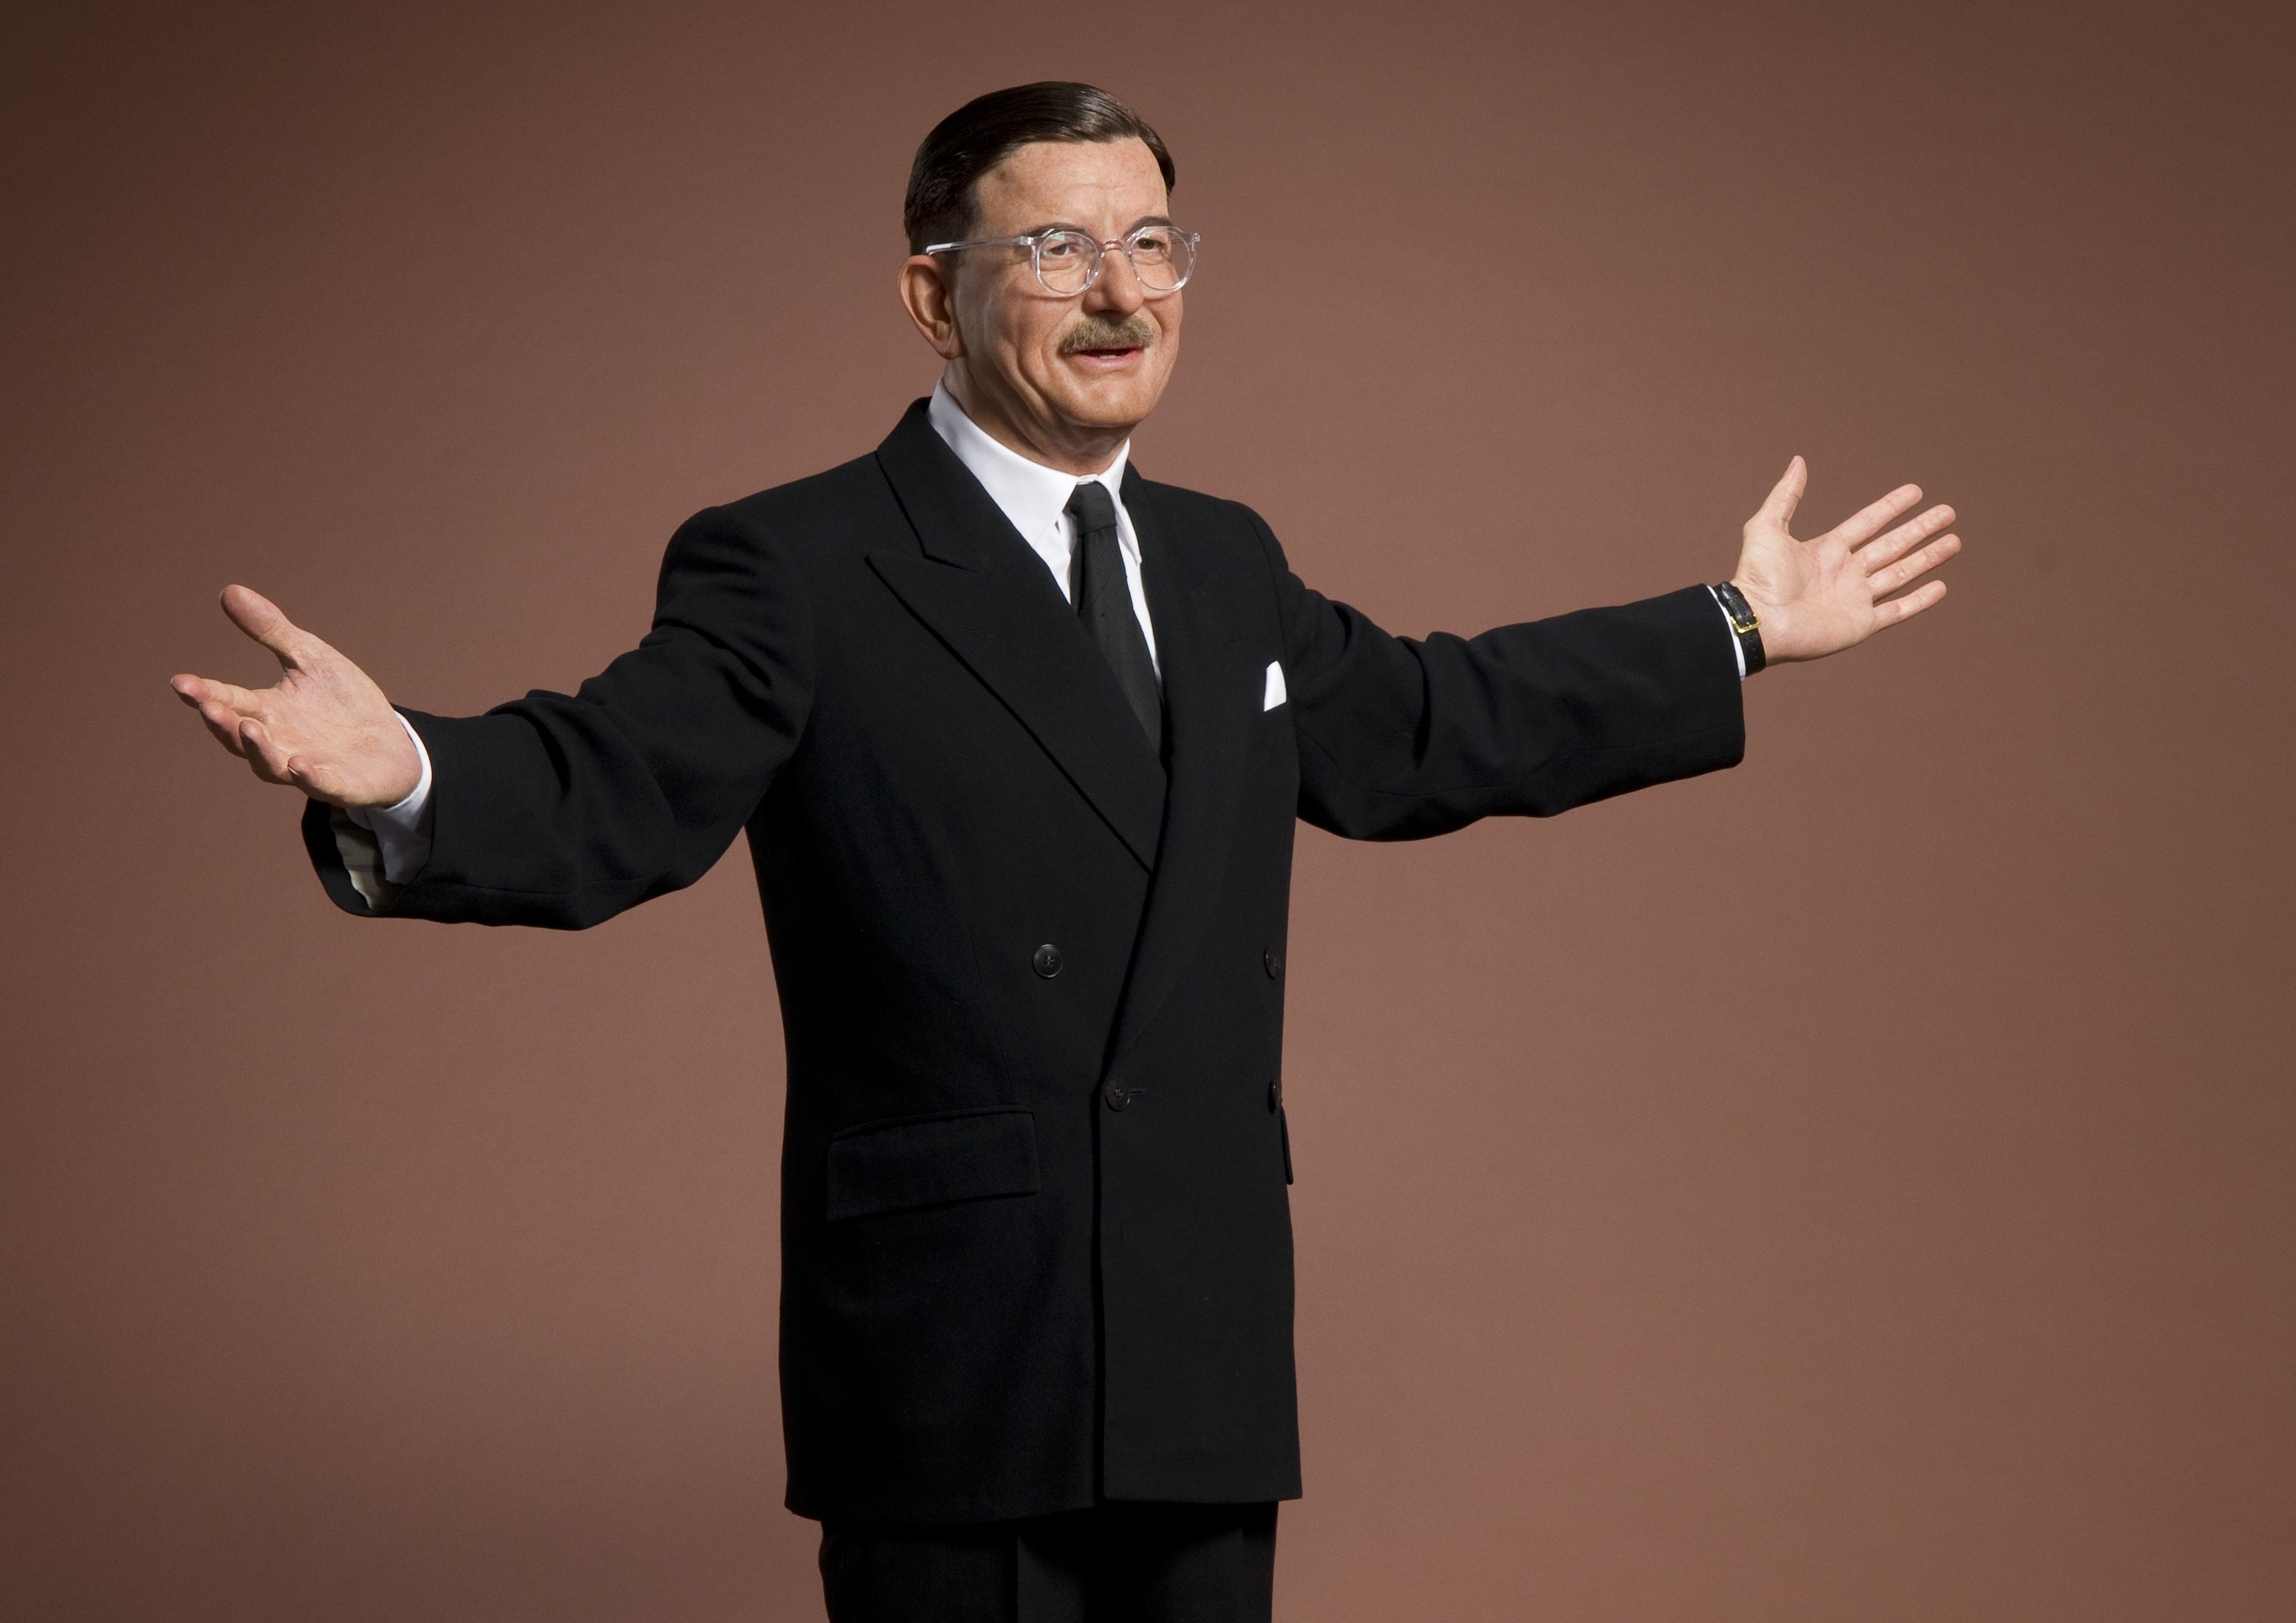 Meet politician Leopold Figl at Madame Tussauds™ Vienna